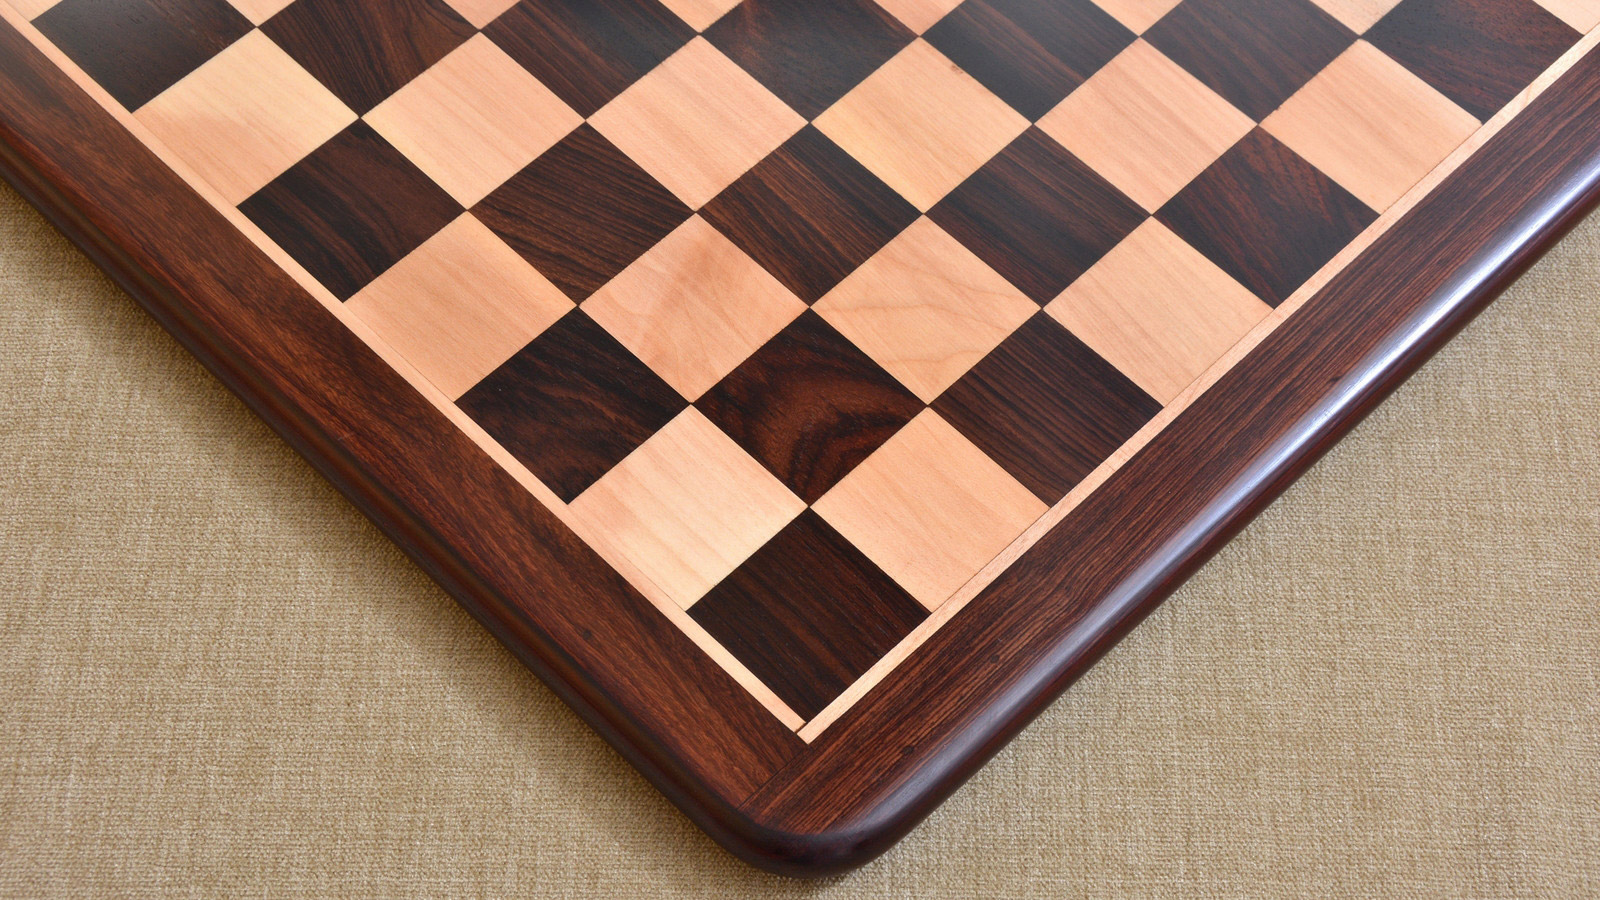  Wooden Chess Board Dark Brown Rose Wood 17